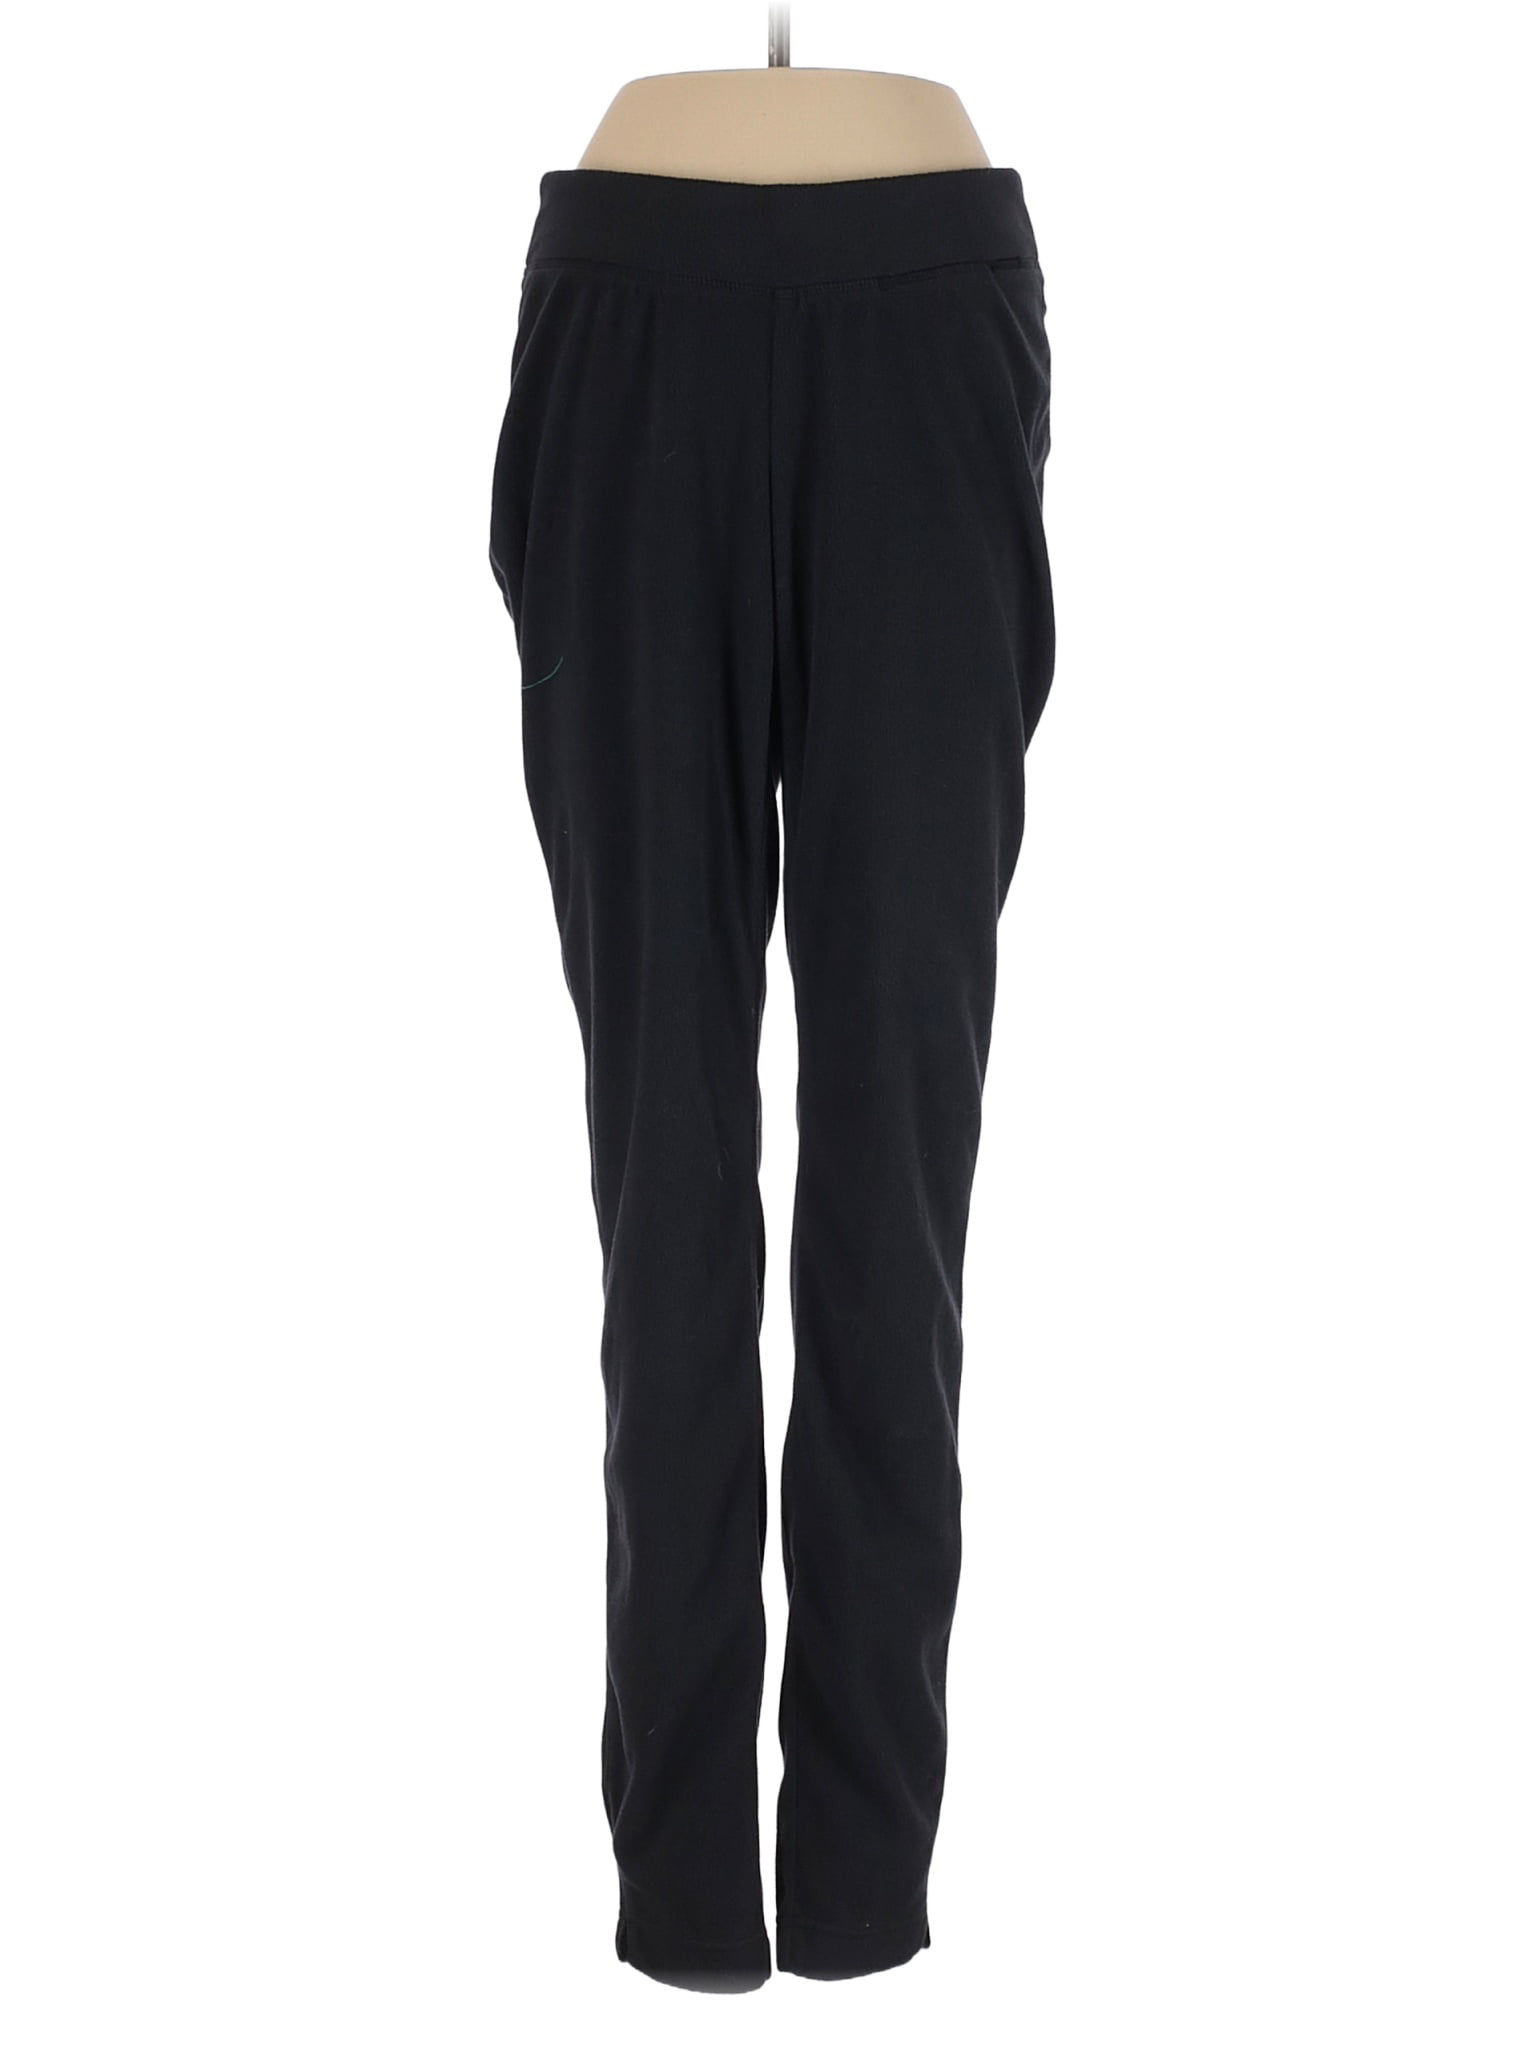 Columbia CLAUDIA RIDGE™ PANT - Trousers - black - Zalando.co.uk